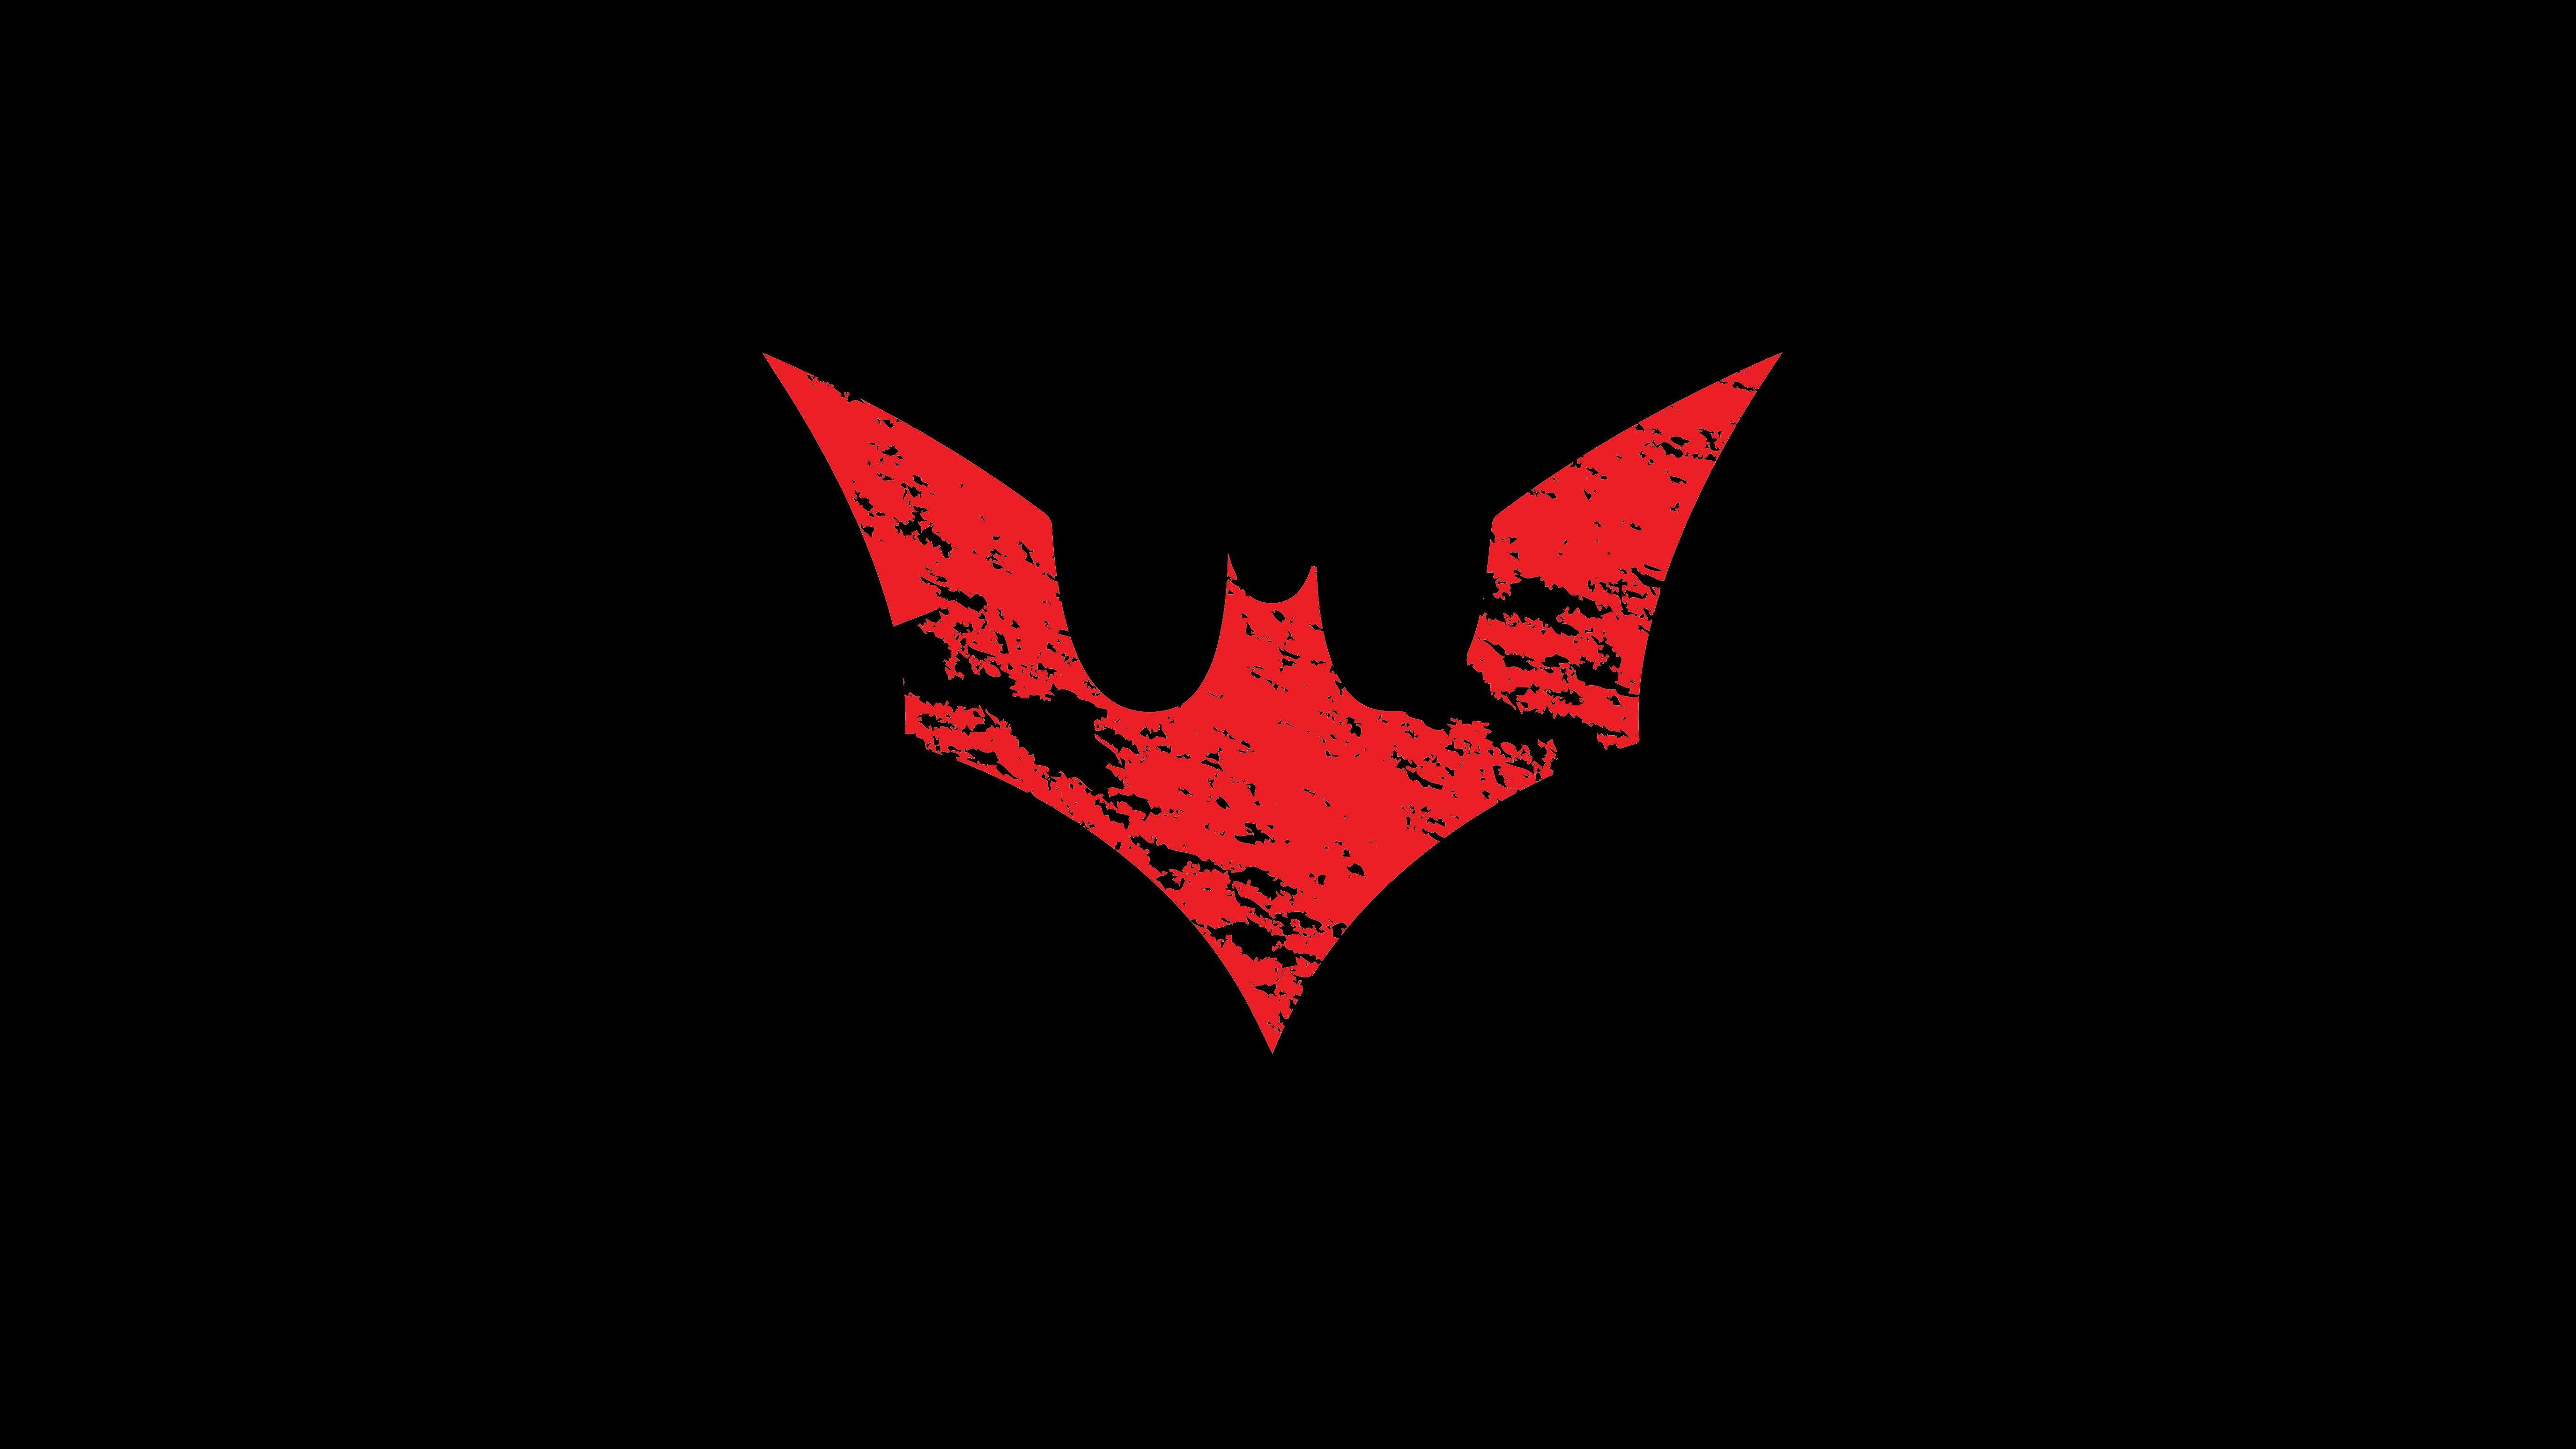 Batman Logo HD Wallpaper and Background Image